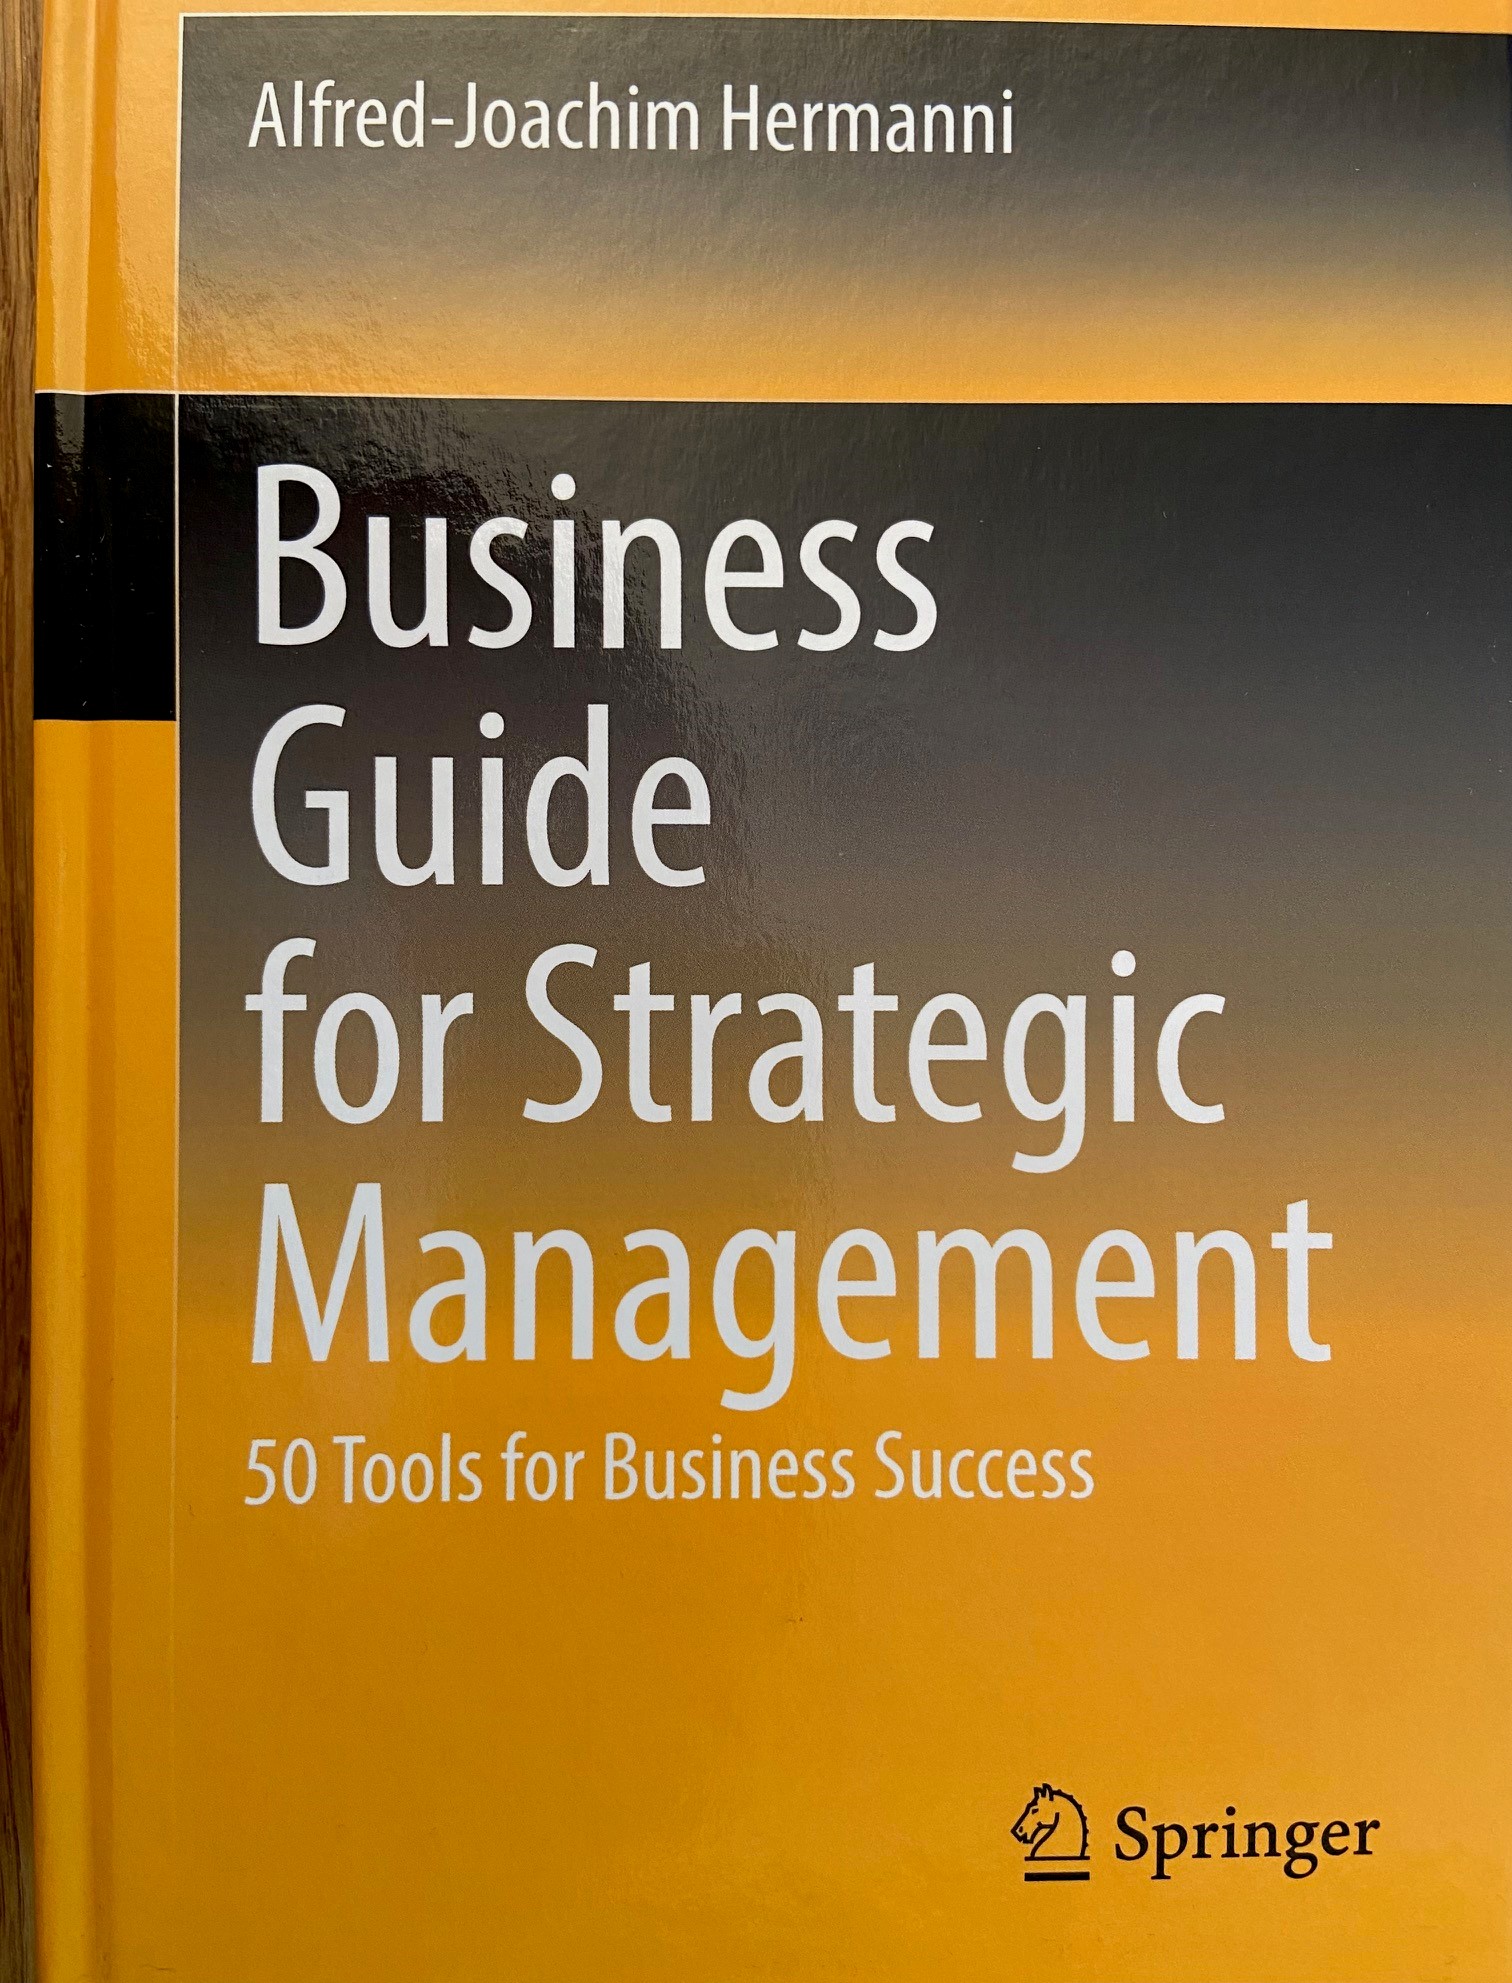 Buchtitel "Business Guide for Strategic Management. 50 Tools for Business Success" von Professor Dr. Alfred-Joachim Hermanni